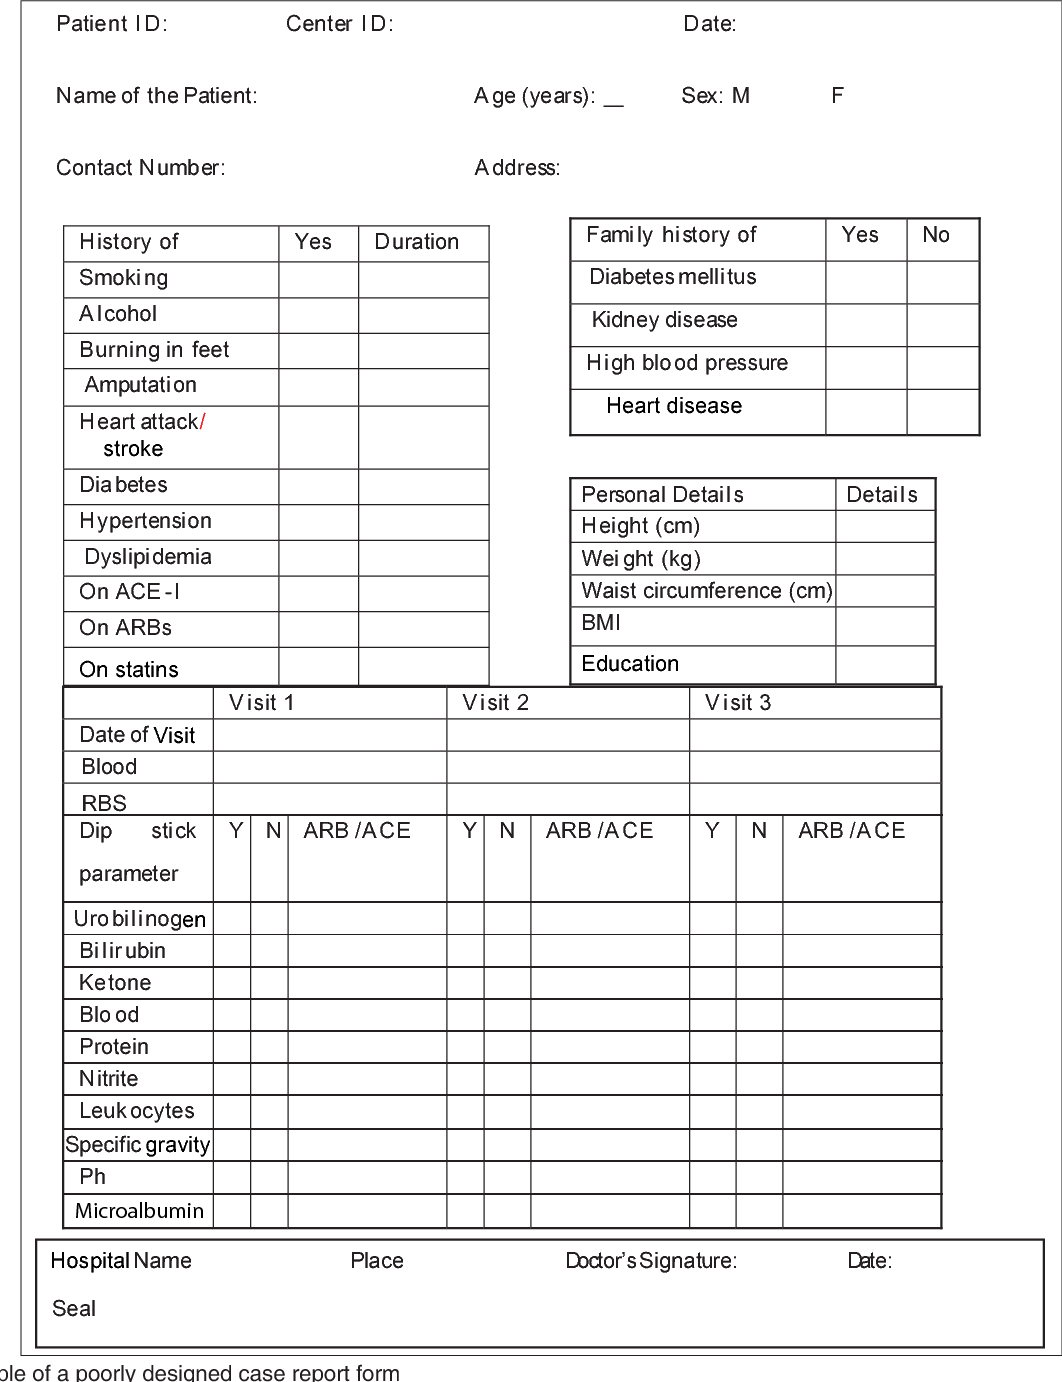 Basics Of Case Report Form Designing In Clinical Research For Case Report Form Template Clinical Trials